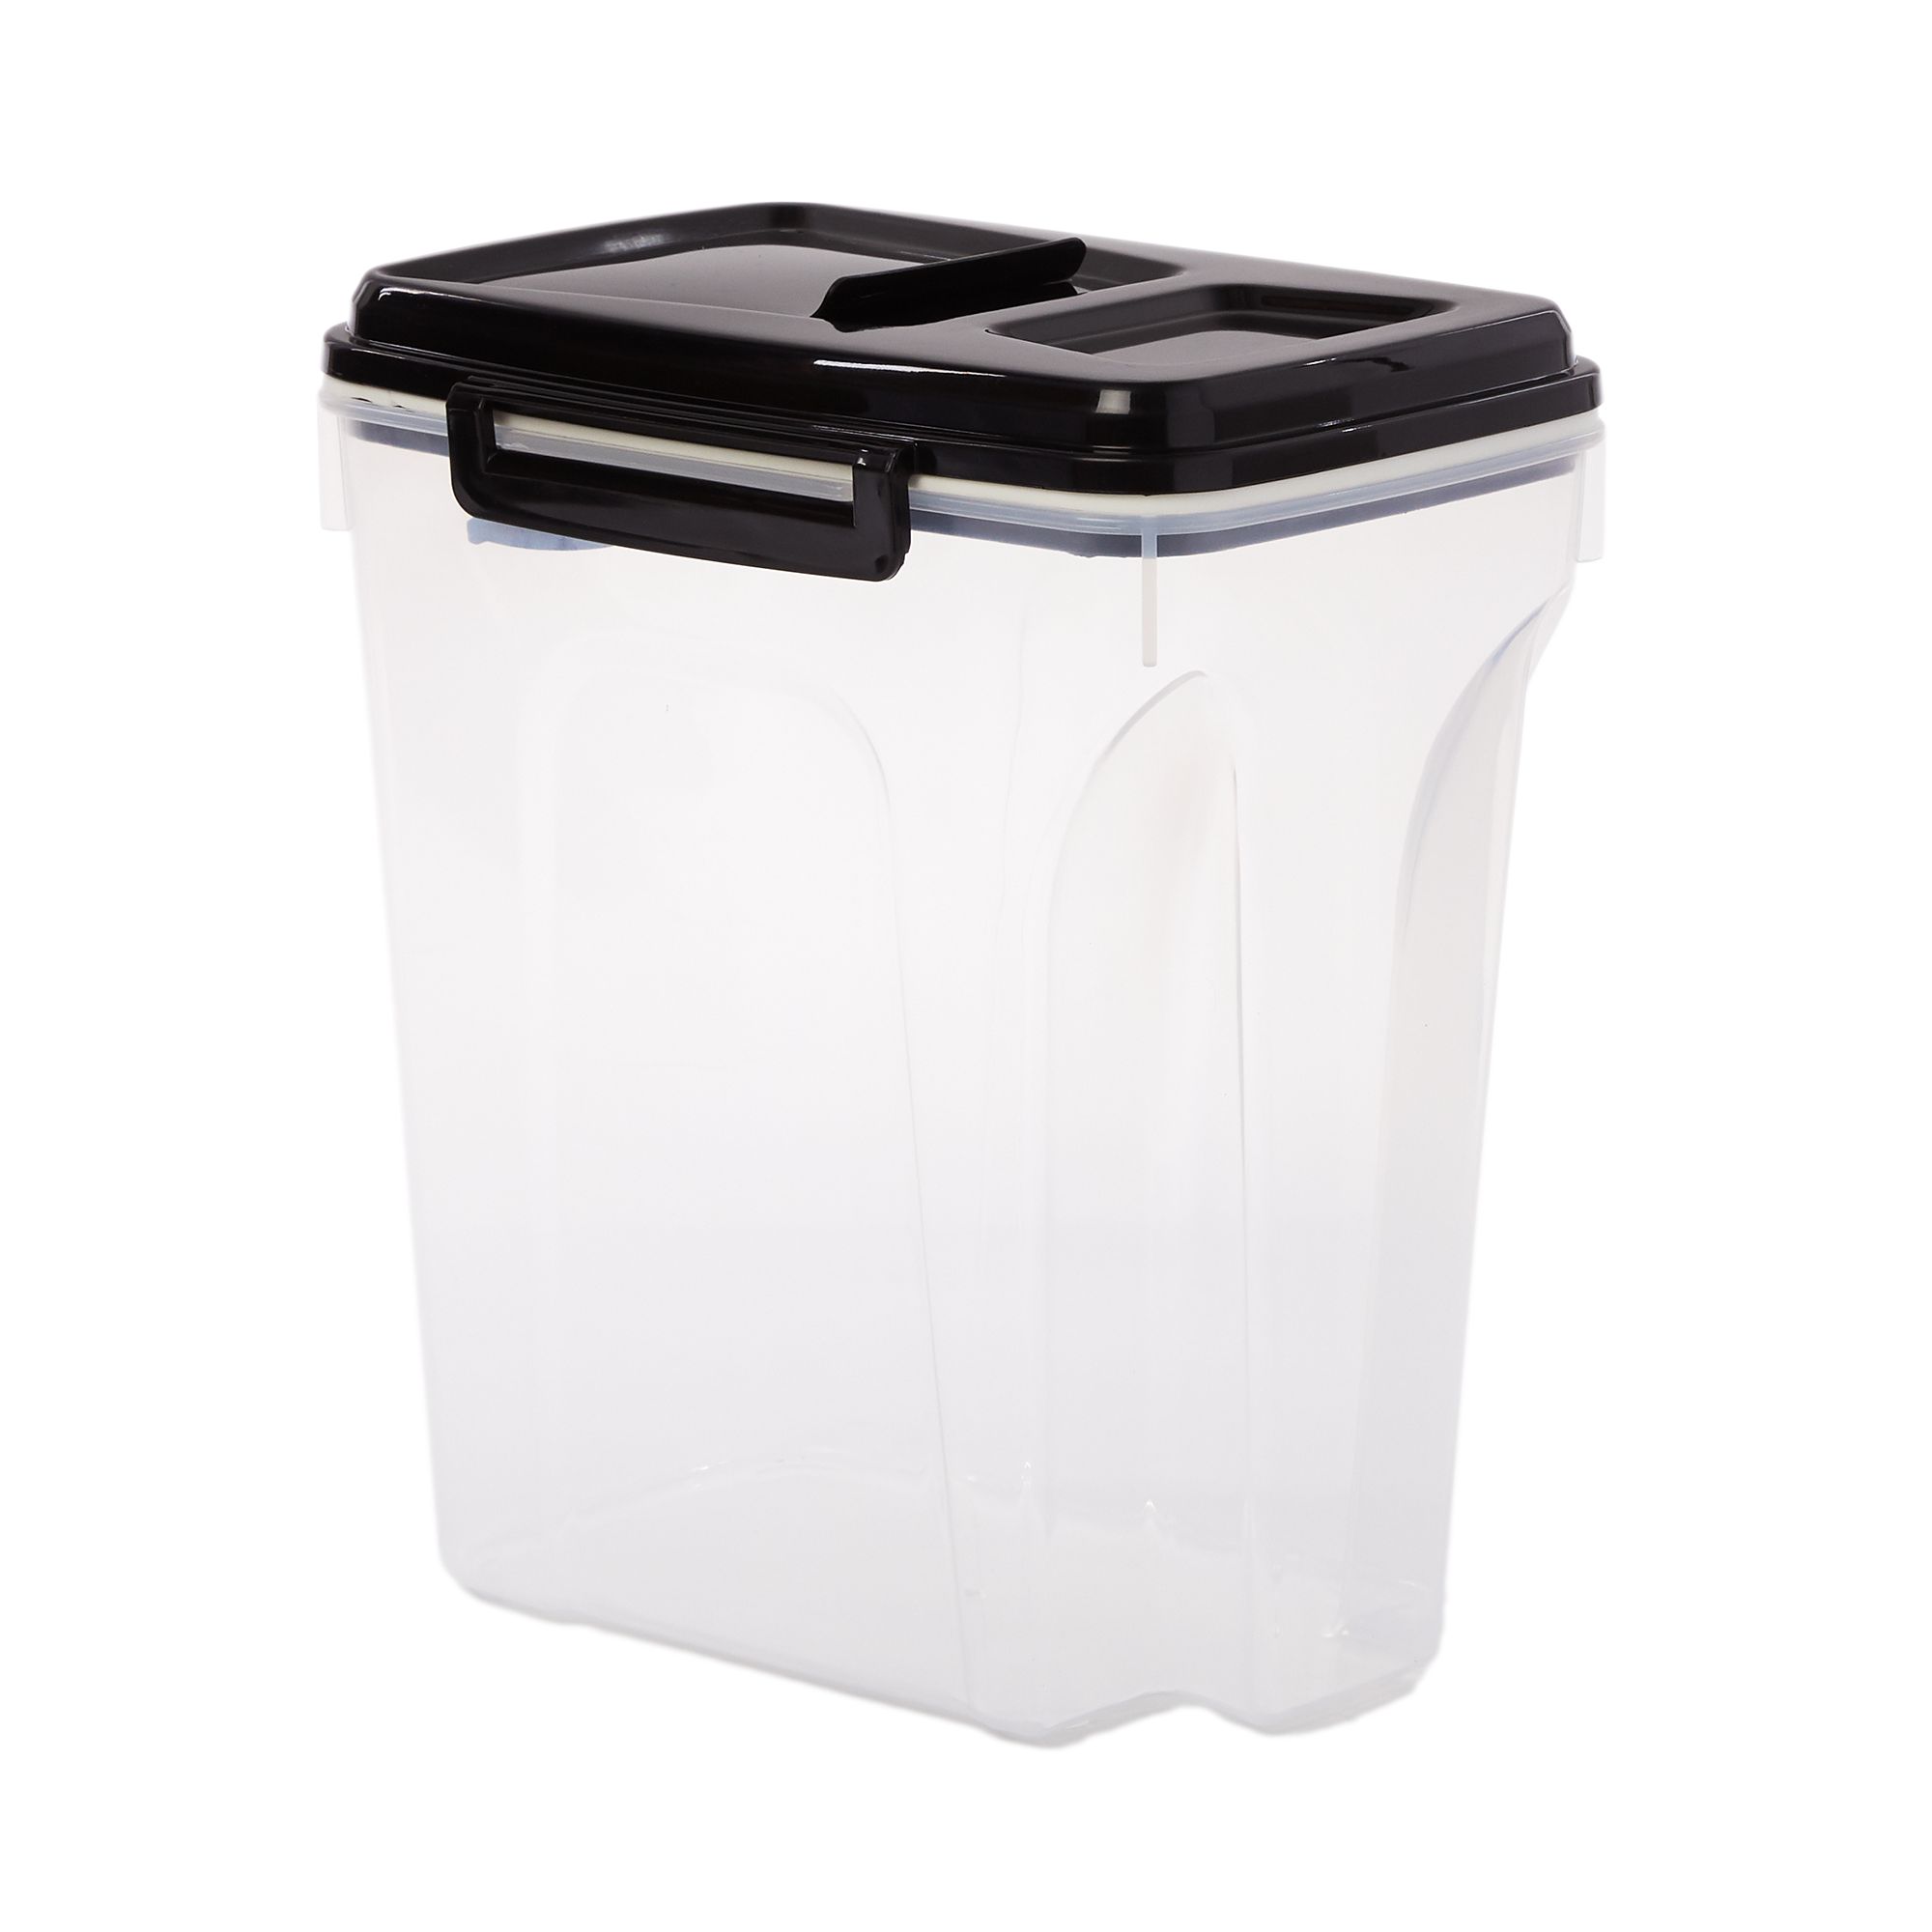 Rubbermaid Plastic Food Storage Container 7 Cup Delivery - DoorDash